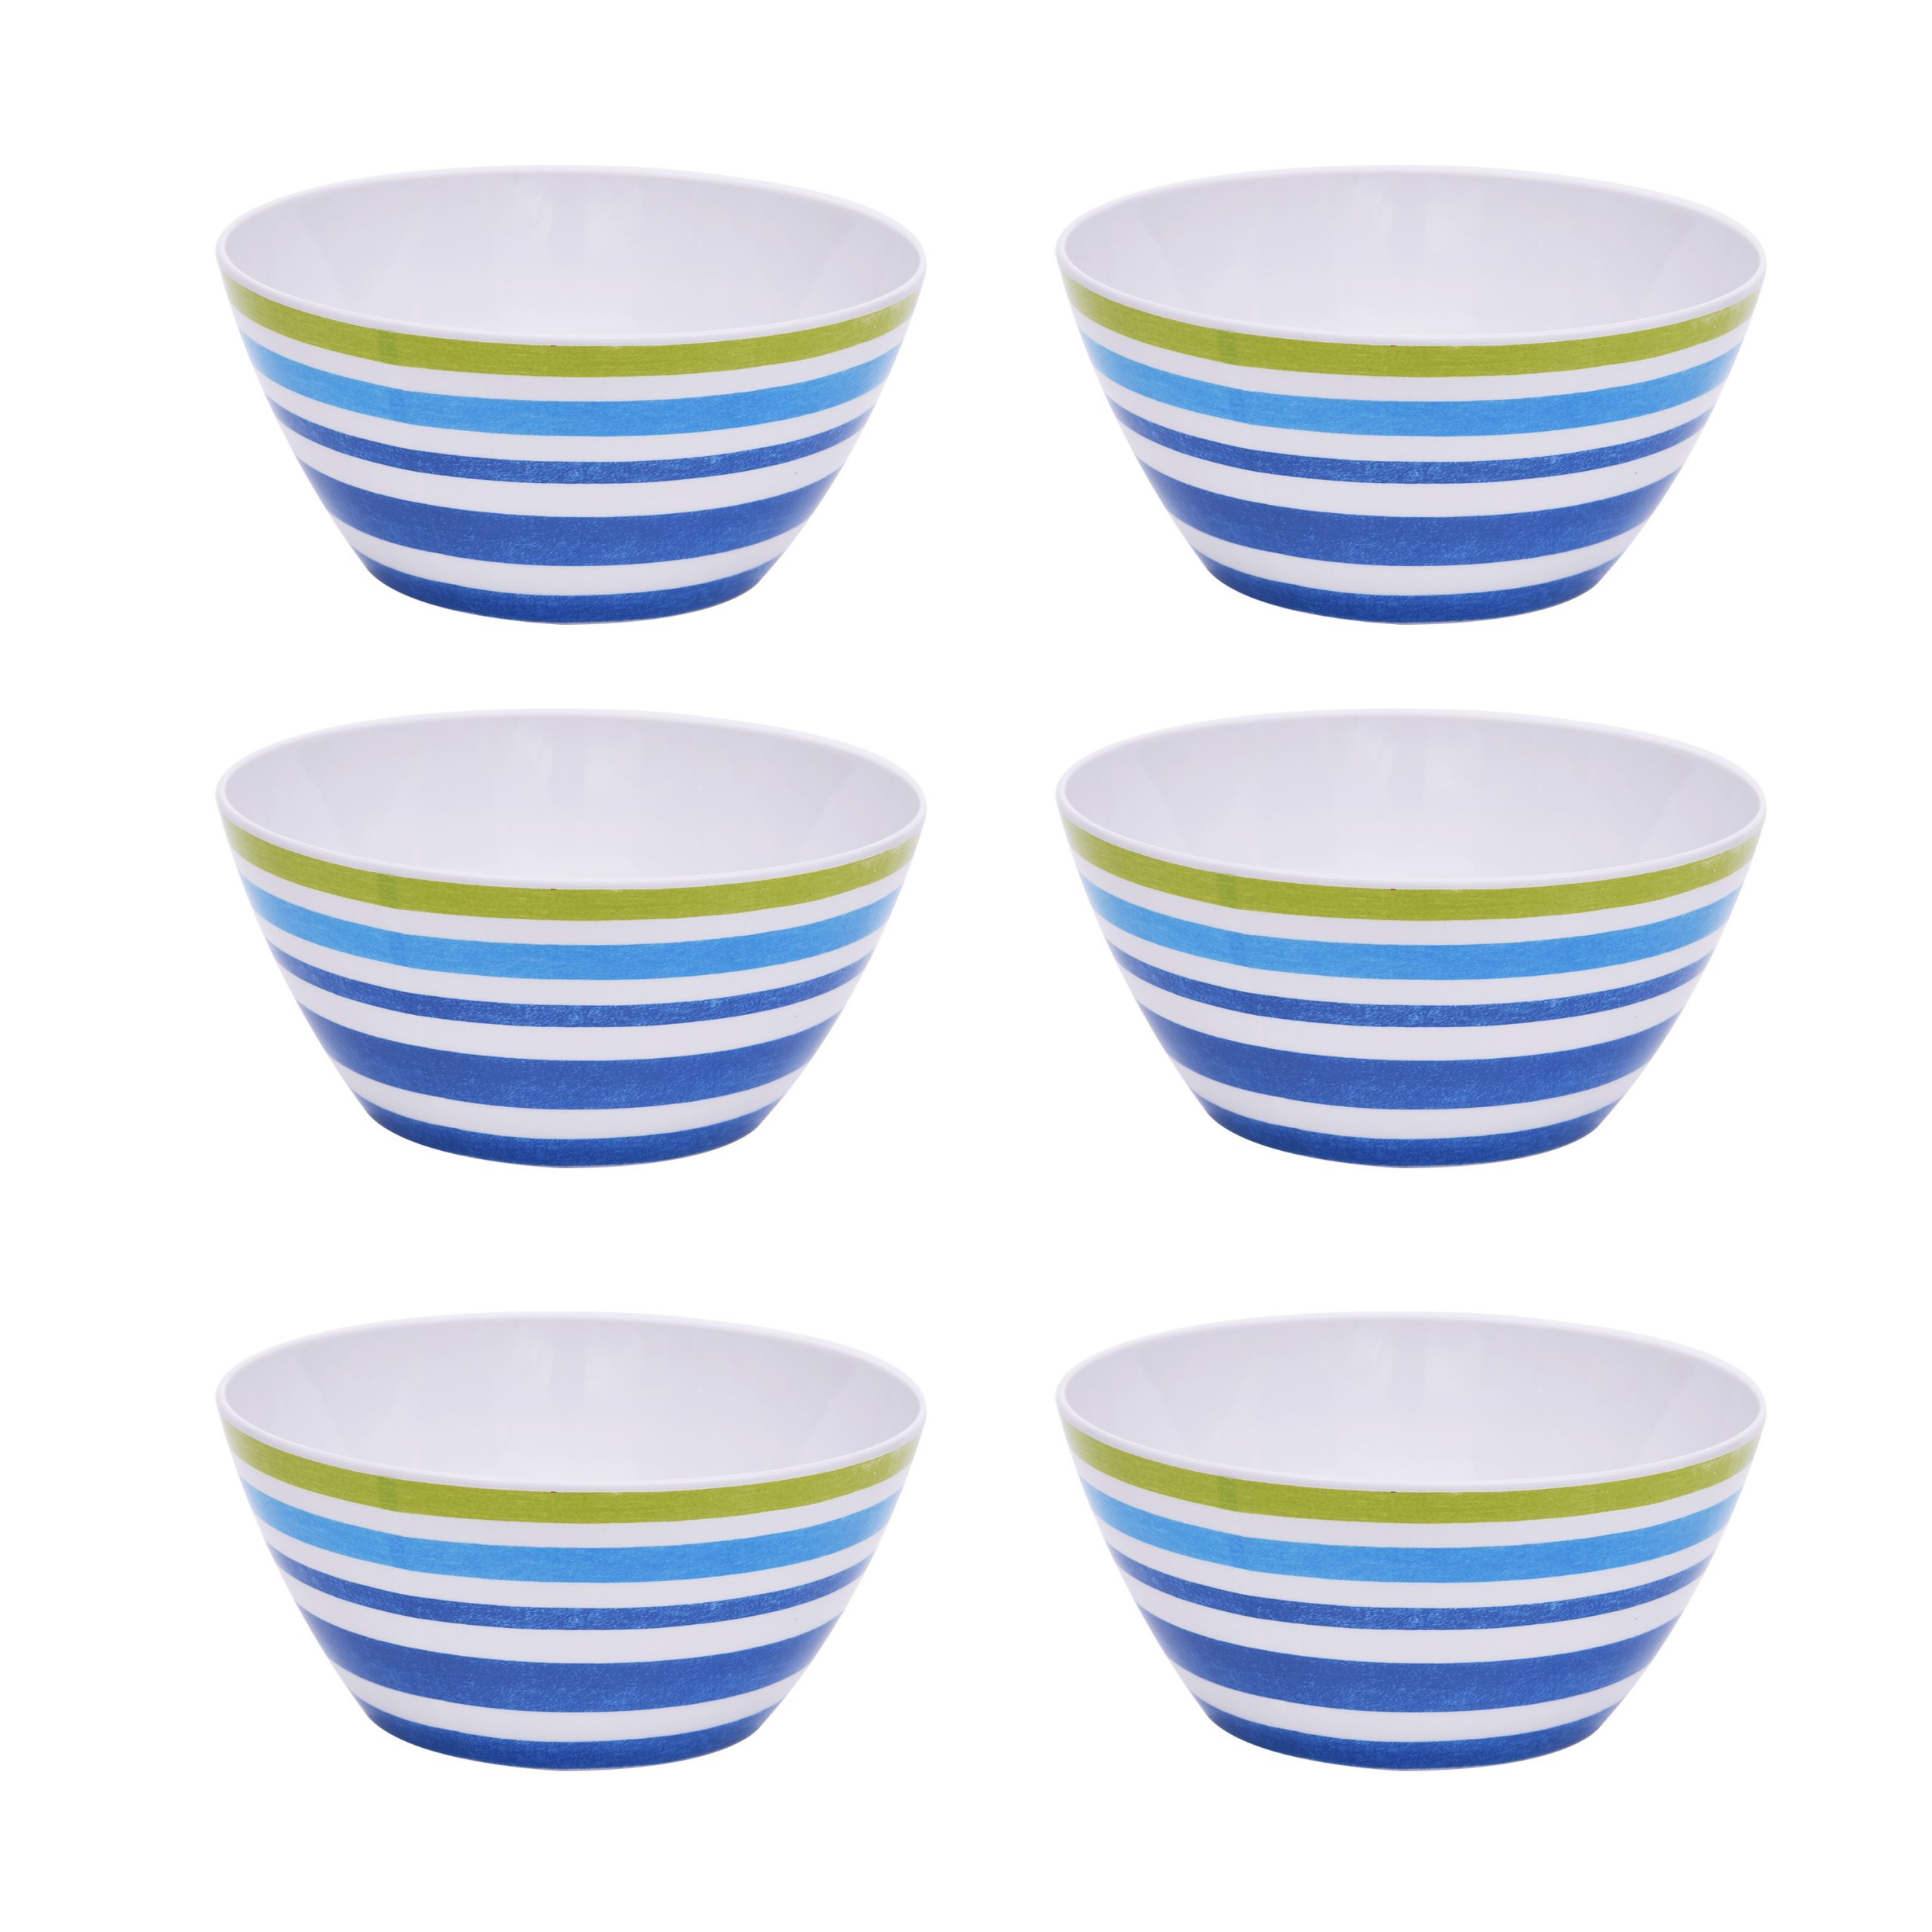 Mainstays Kids Melamine Blue Striped Bowls, Set of 6